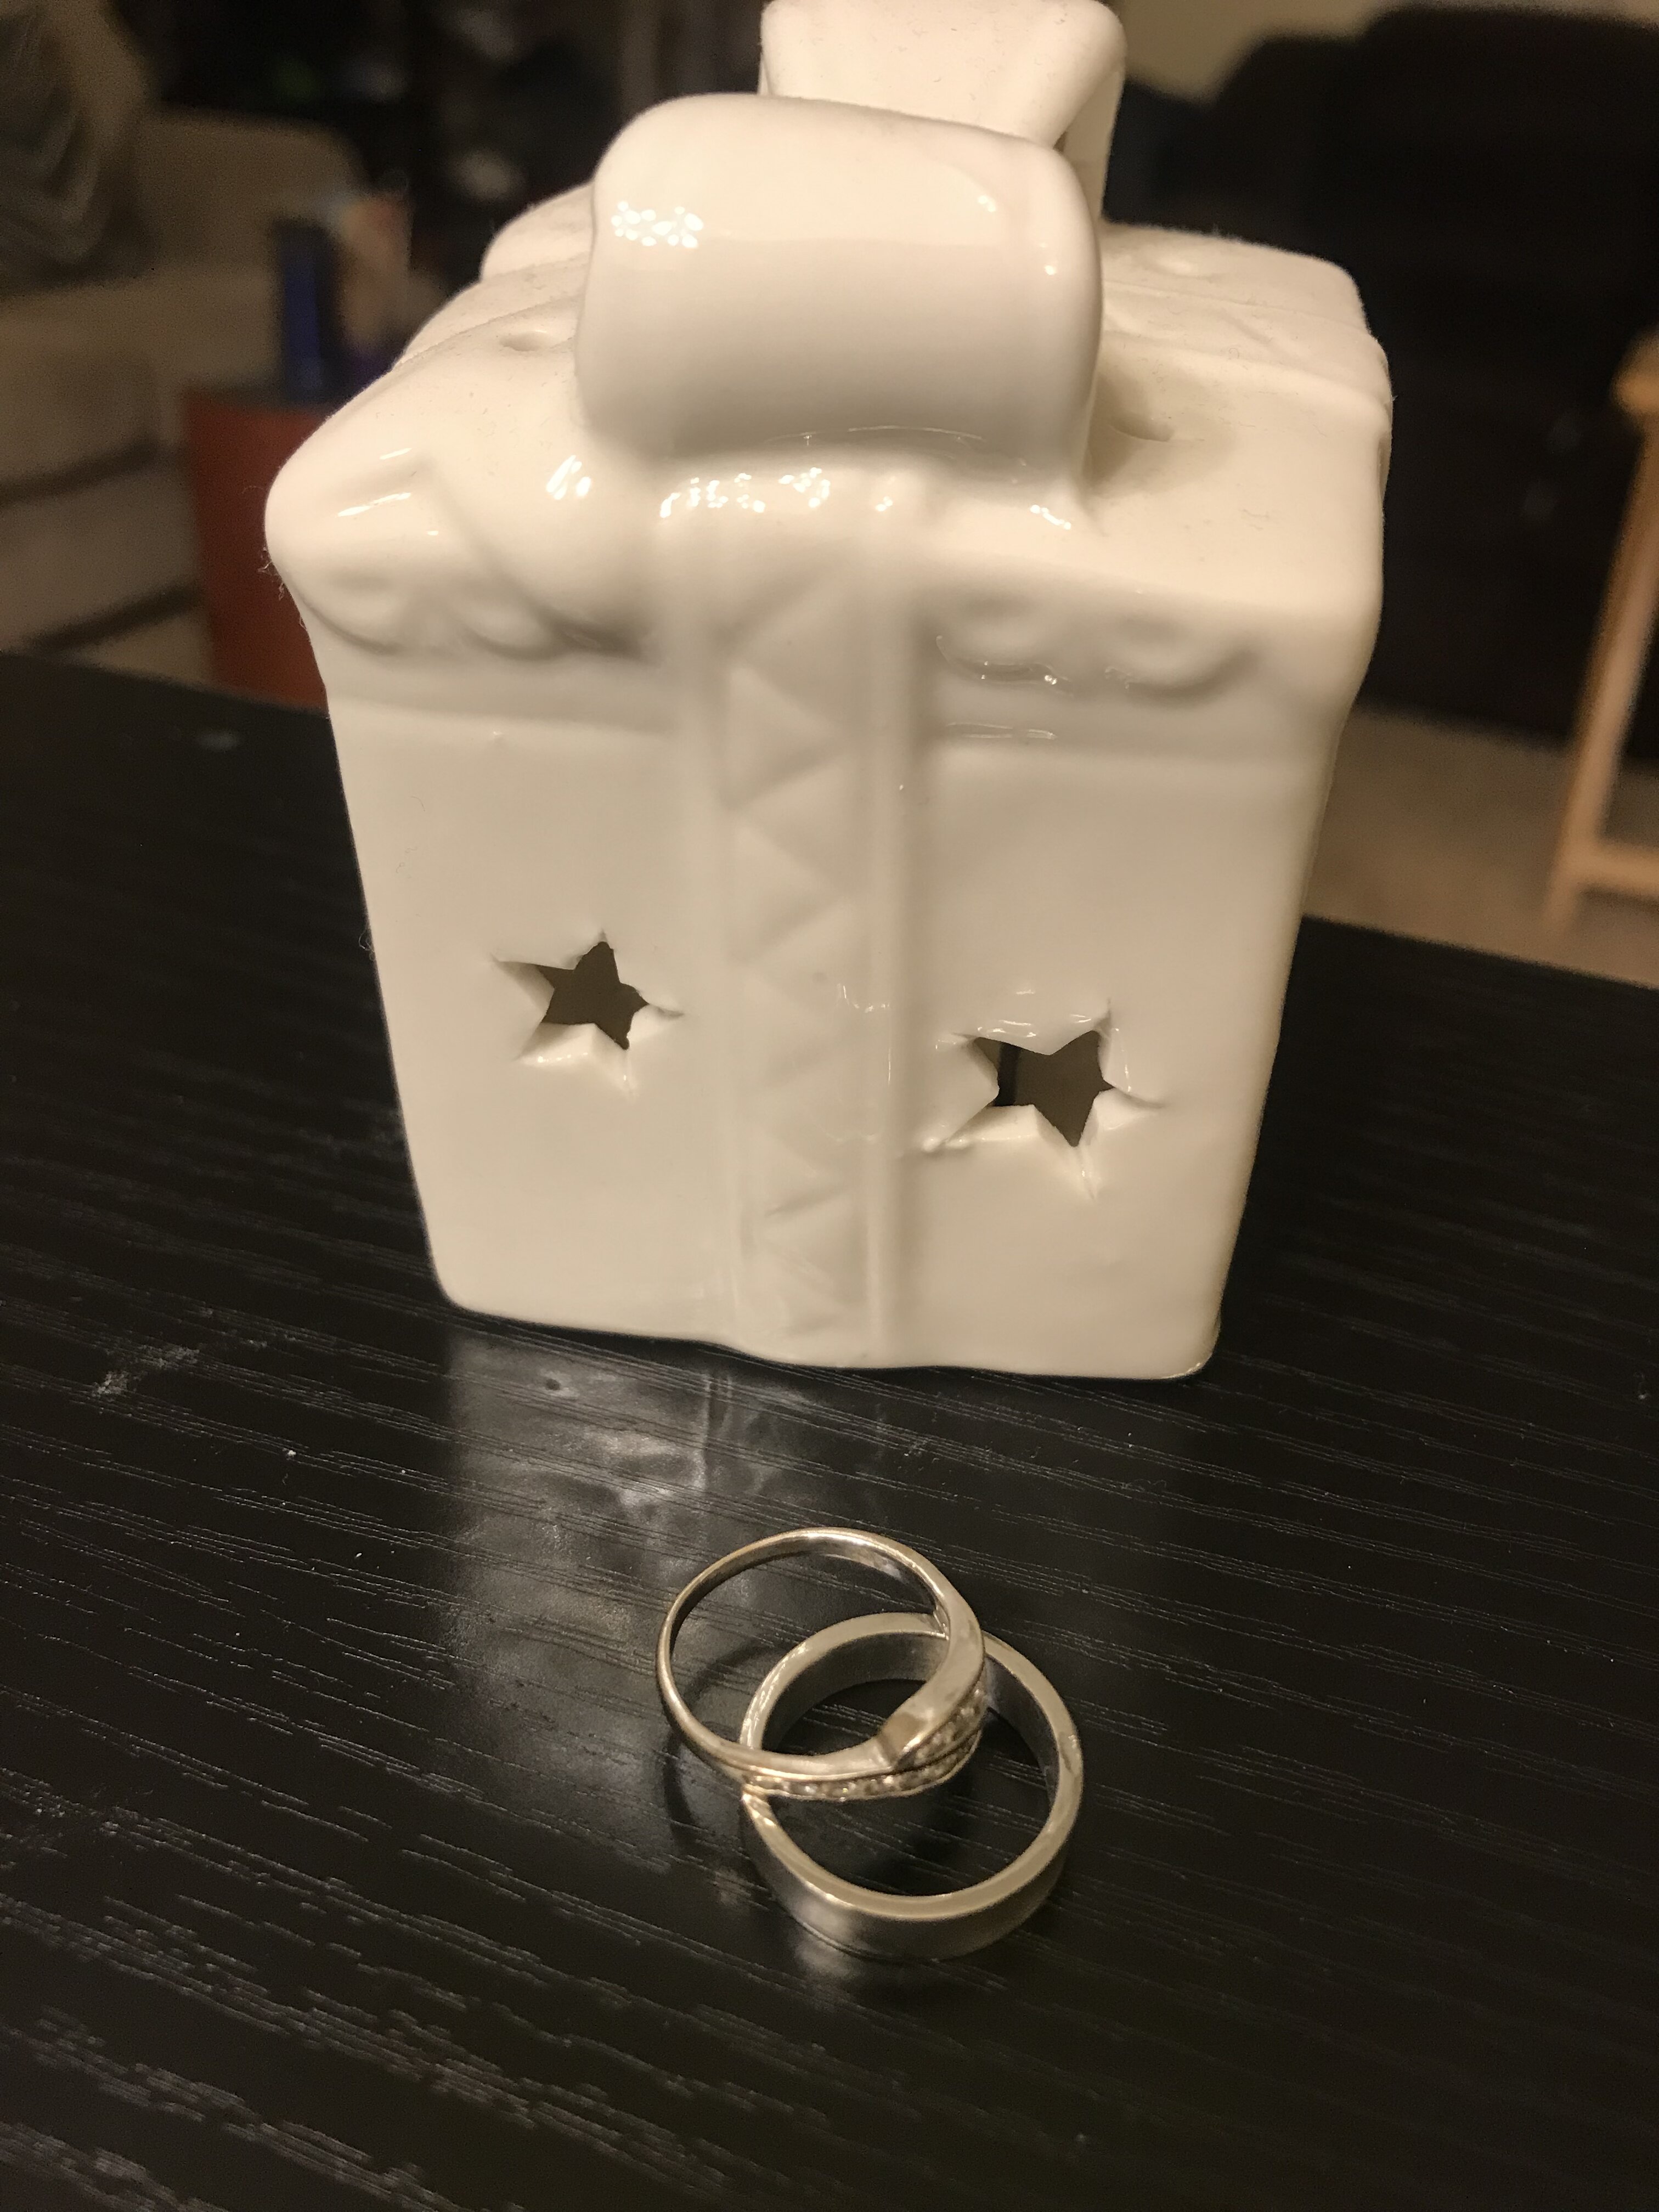 Juno and Ella’s wedding rings - marriage article